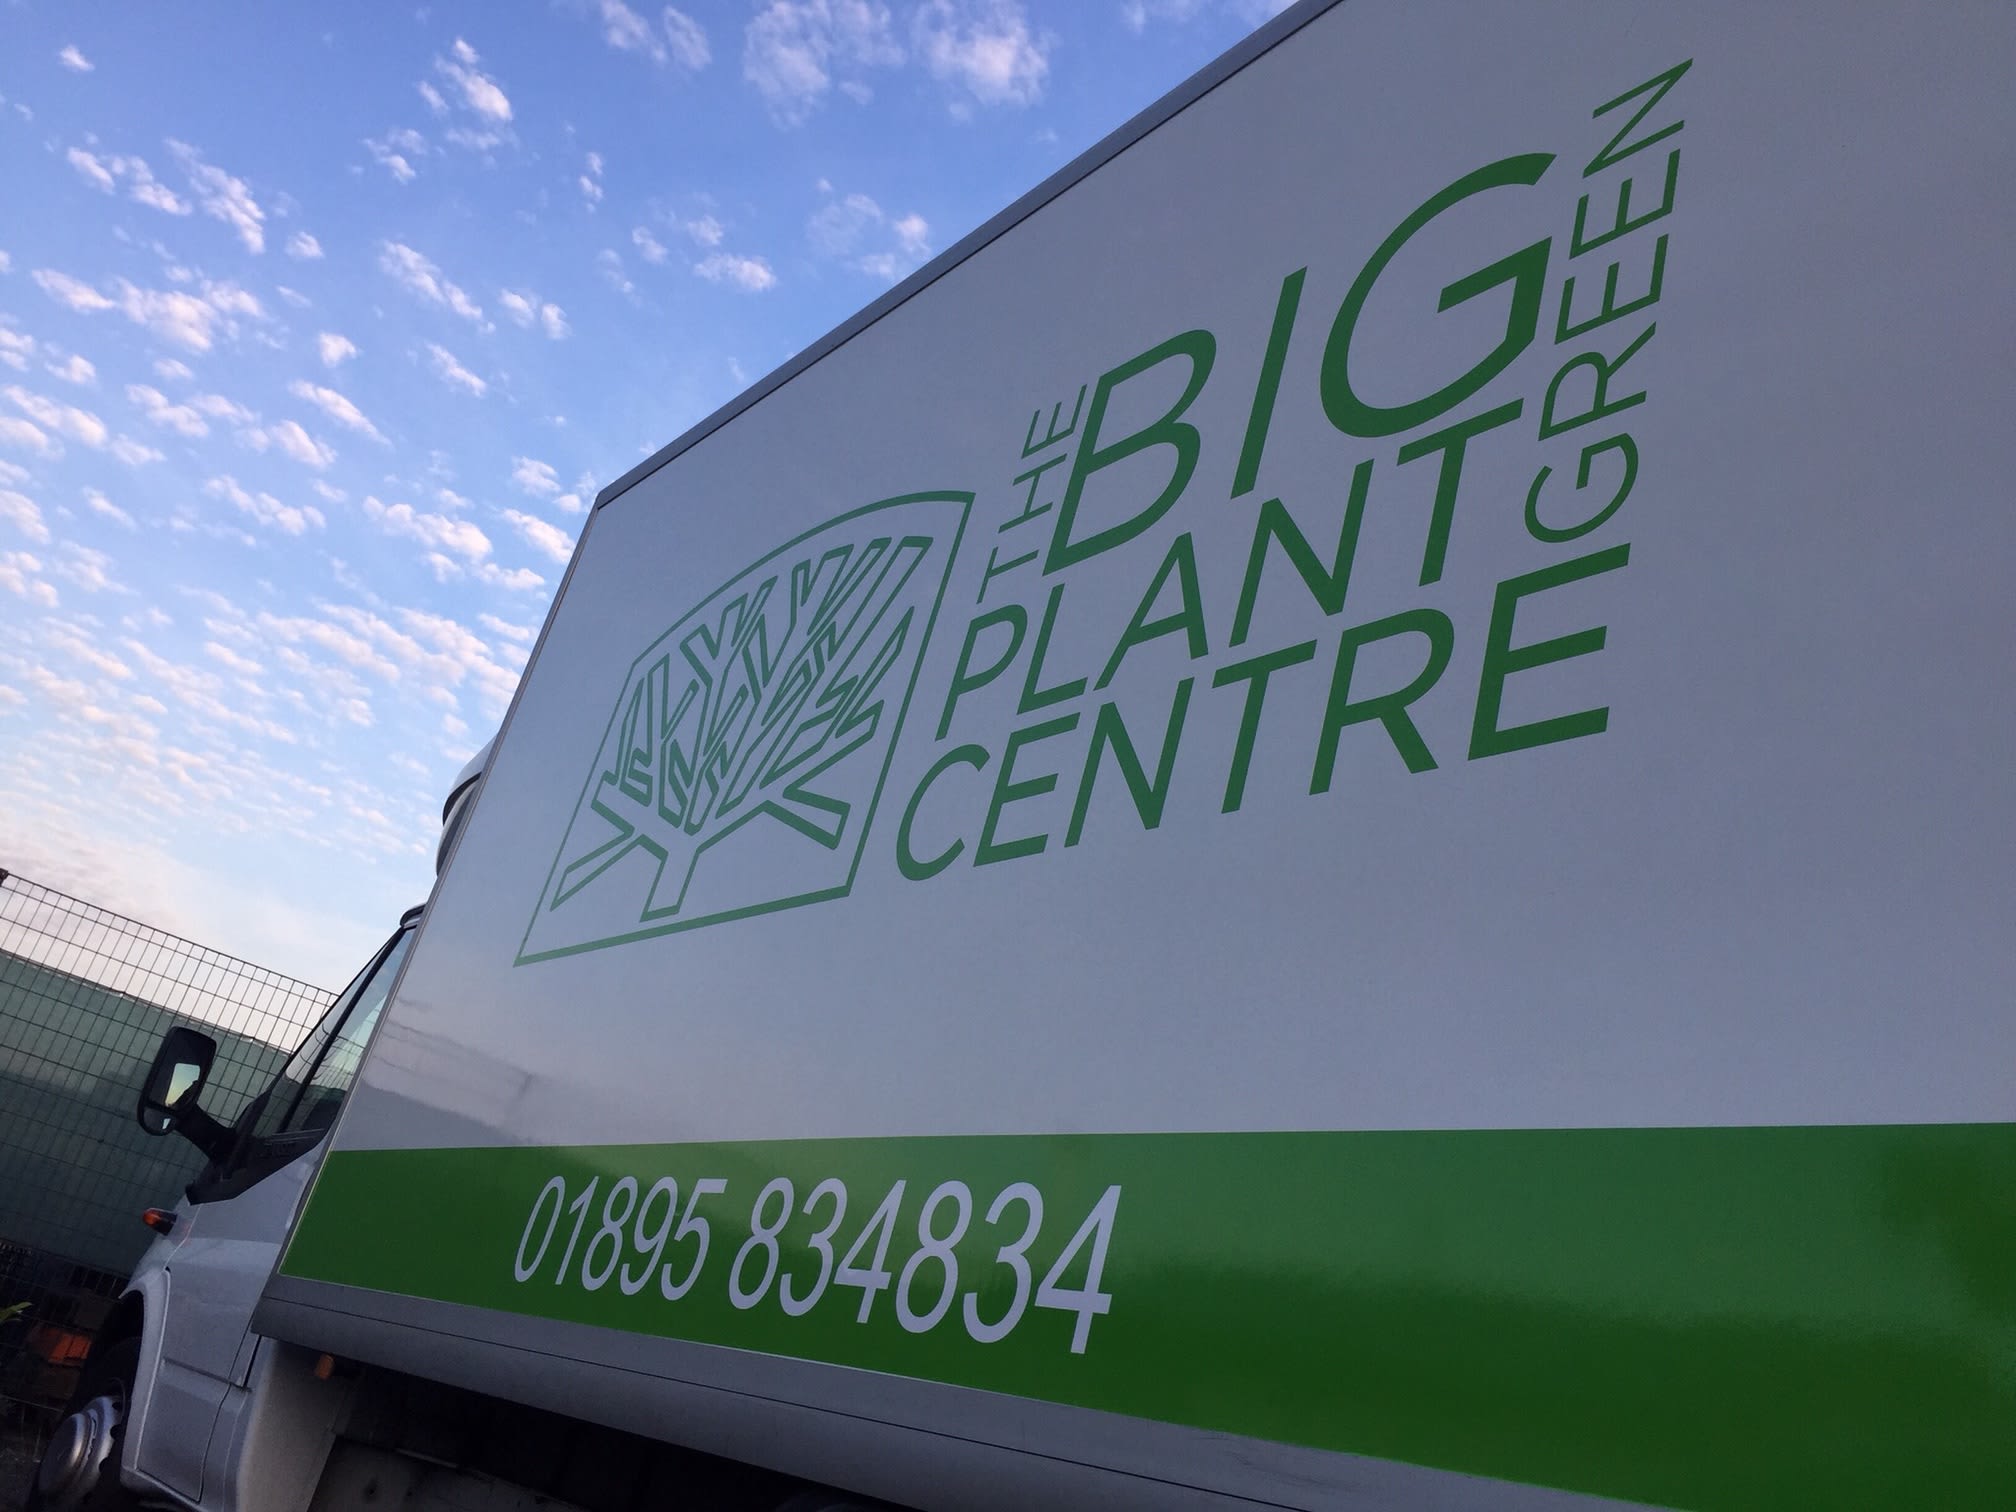 The Big Green Plant Centre Uxbridge 01895 834834